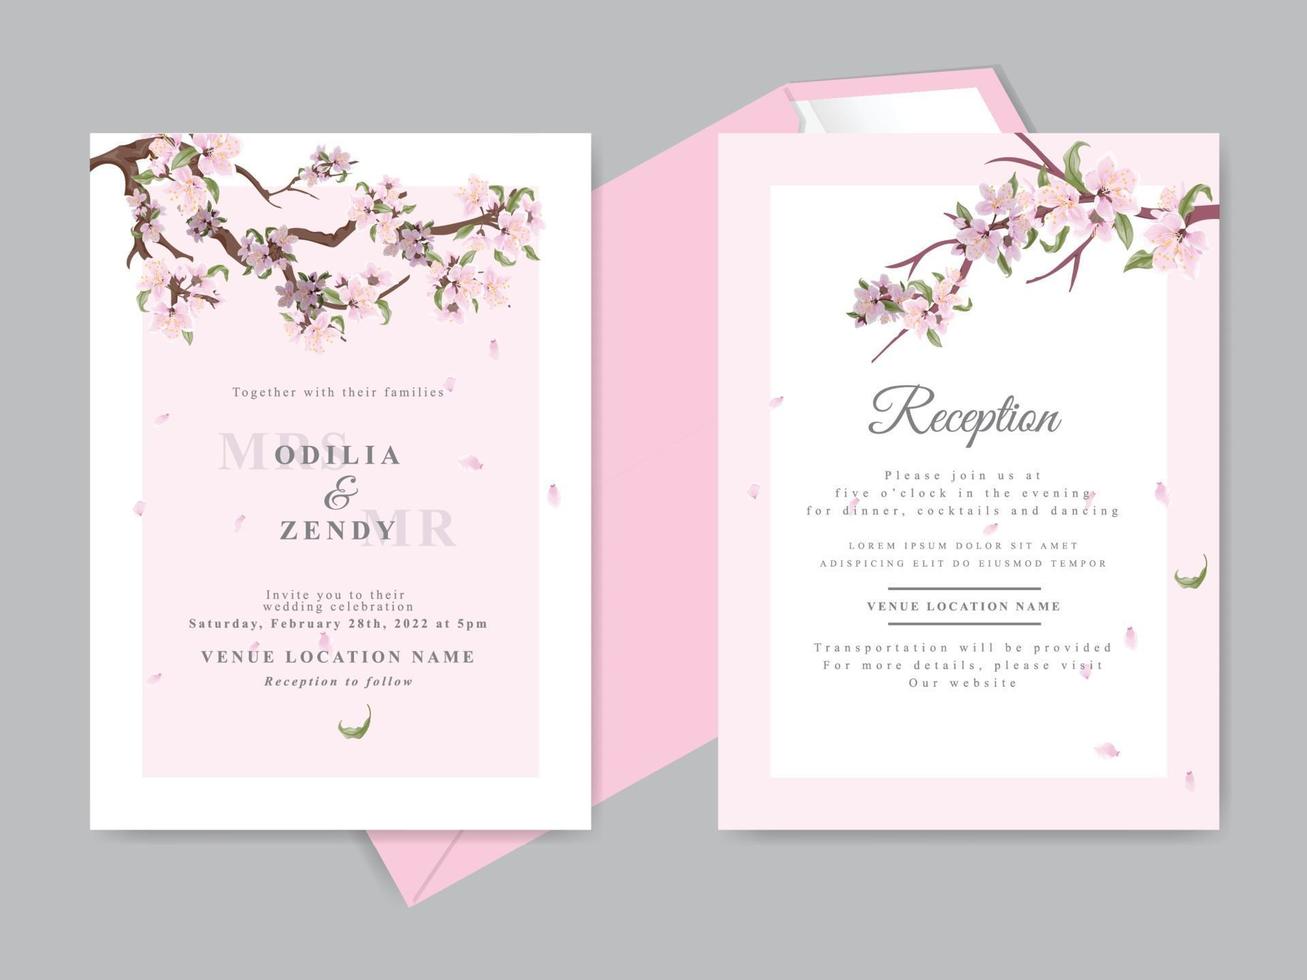 hermosa invitación de boda tema de flor de cerezo 2371795 Vector en Vecteezy